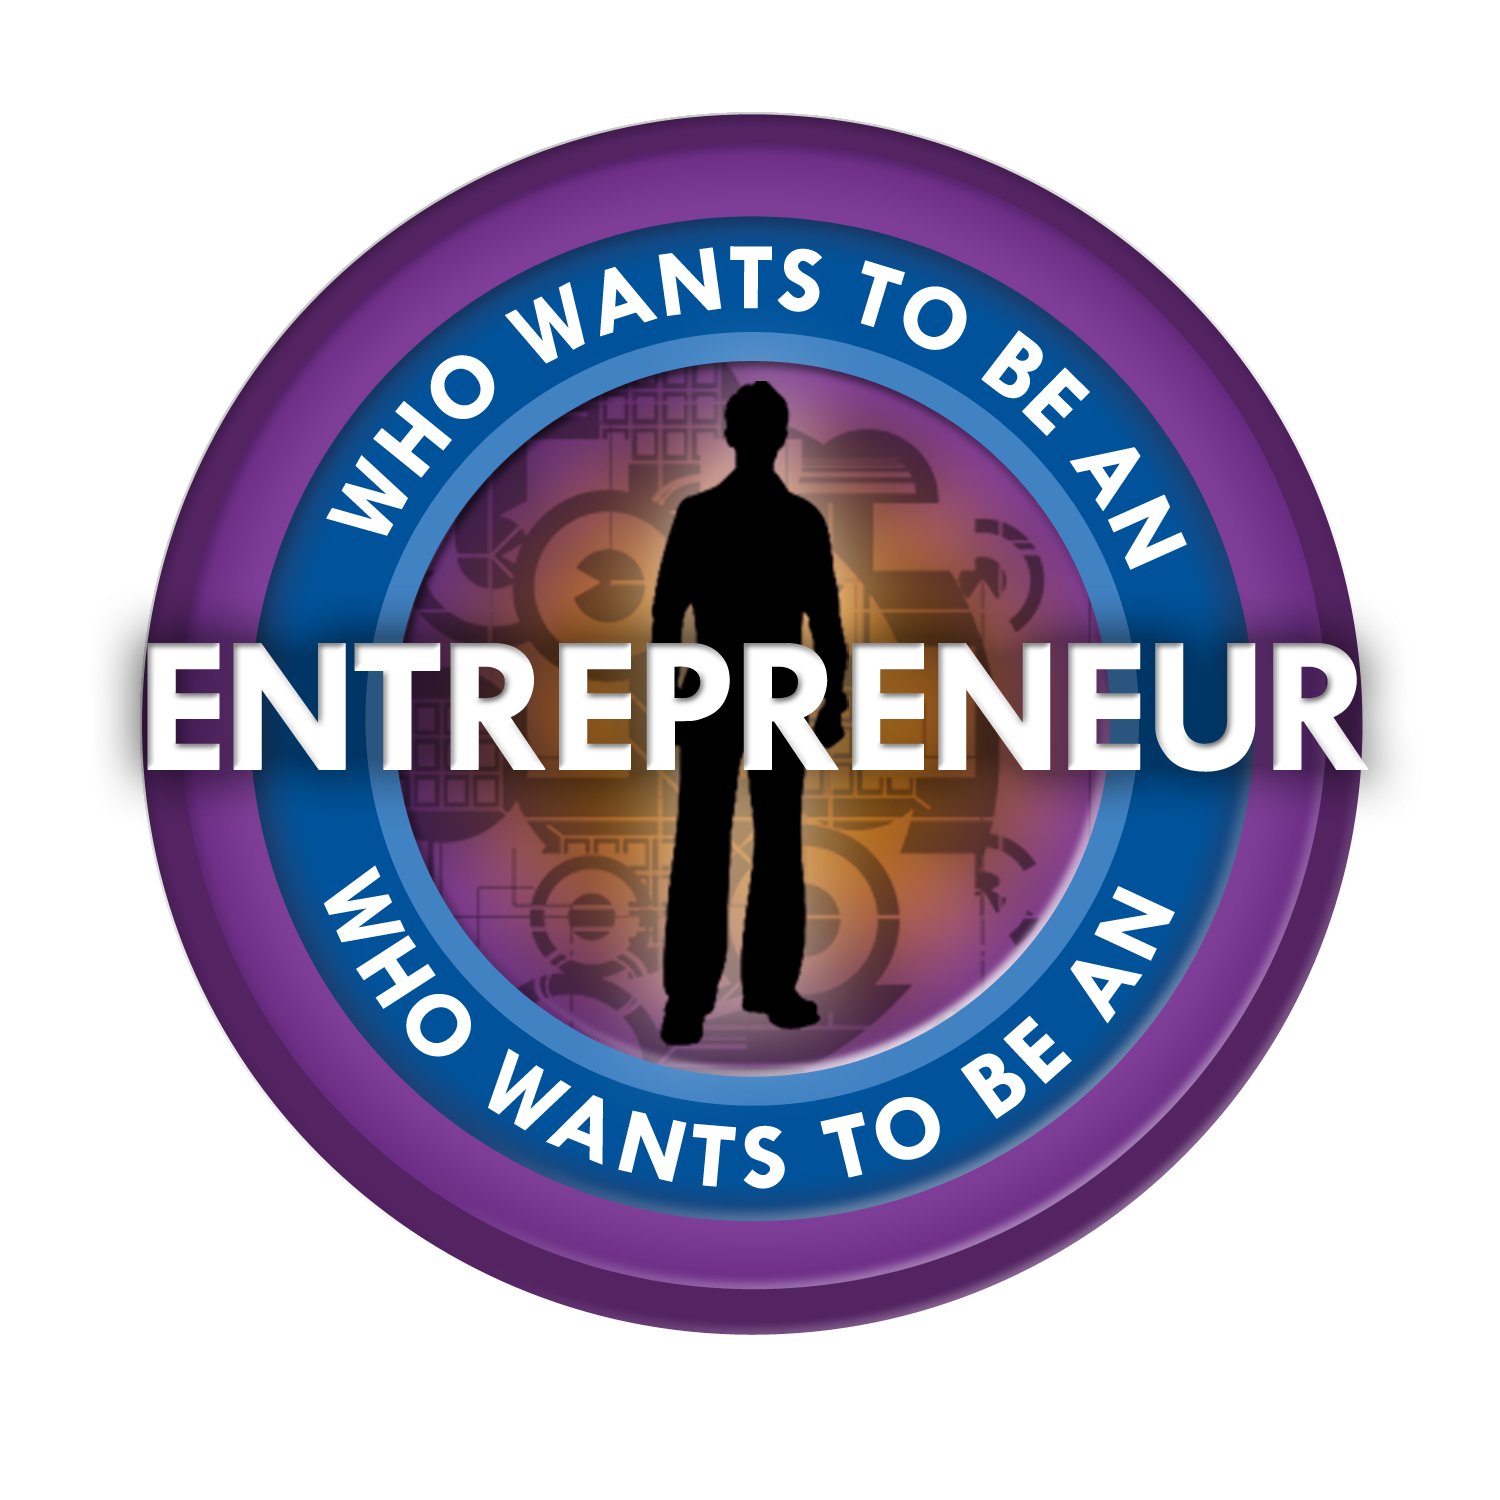 entrepreneur logo png